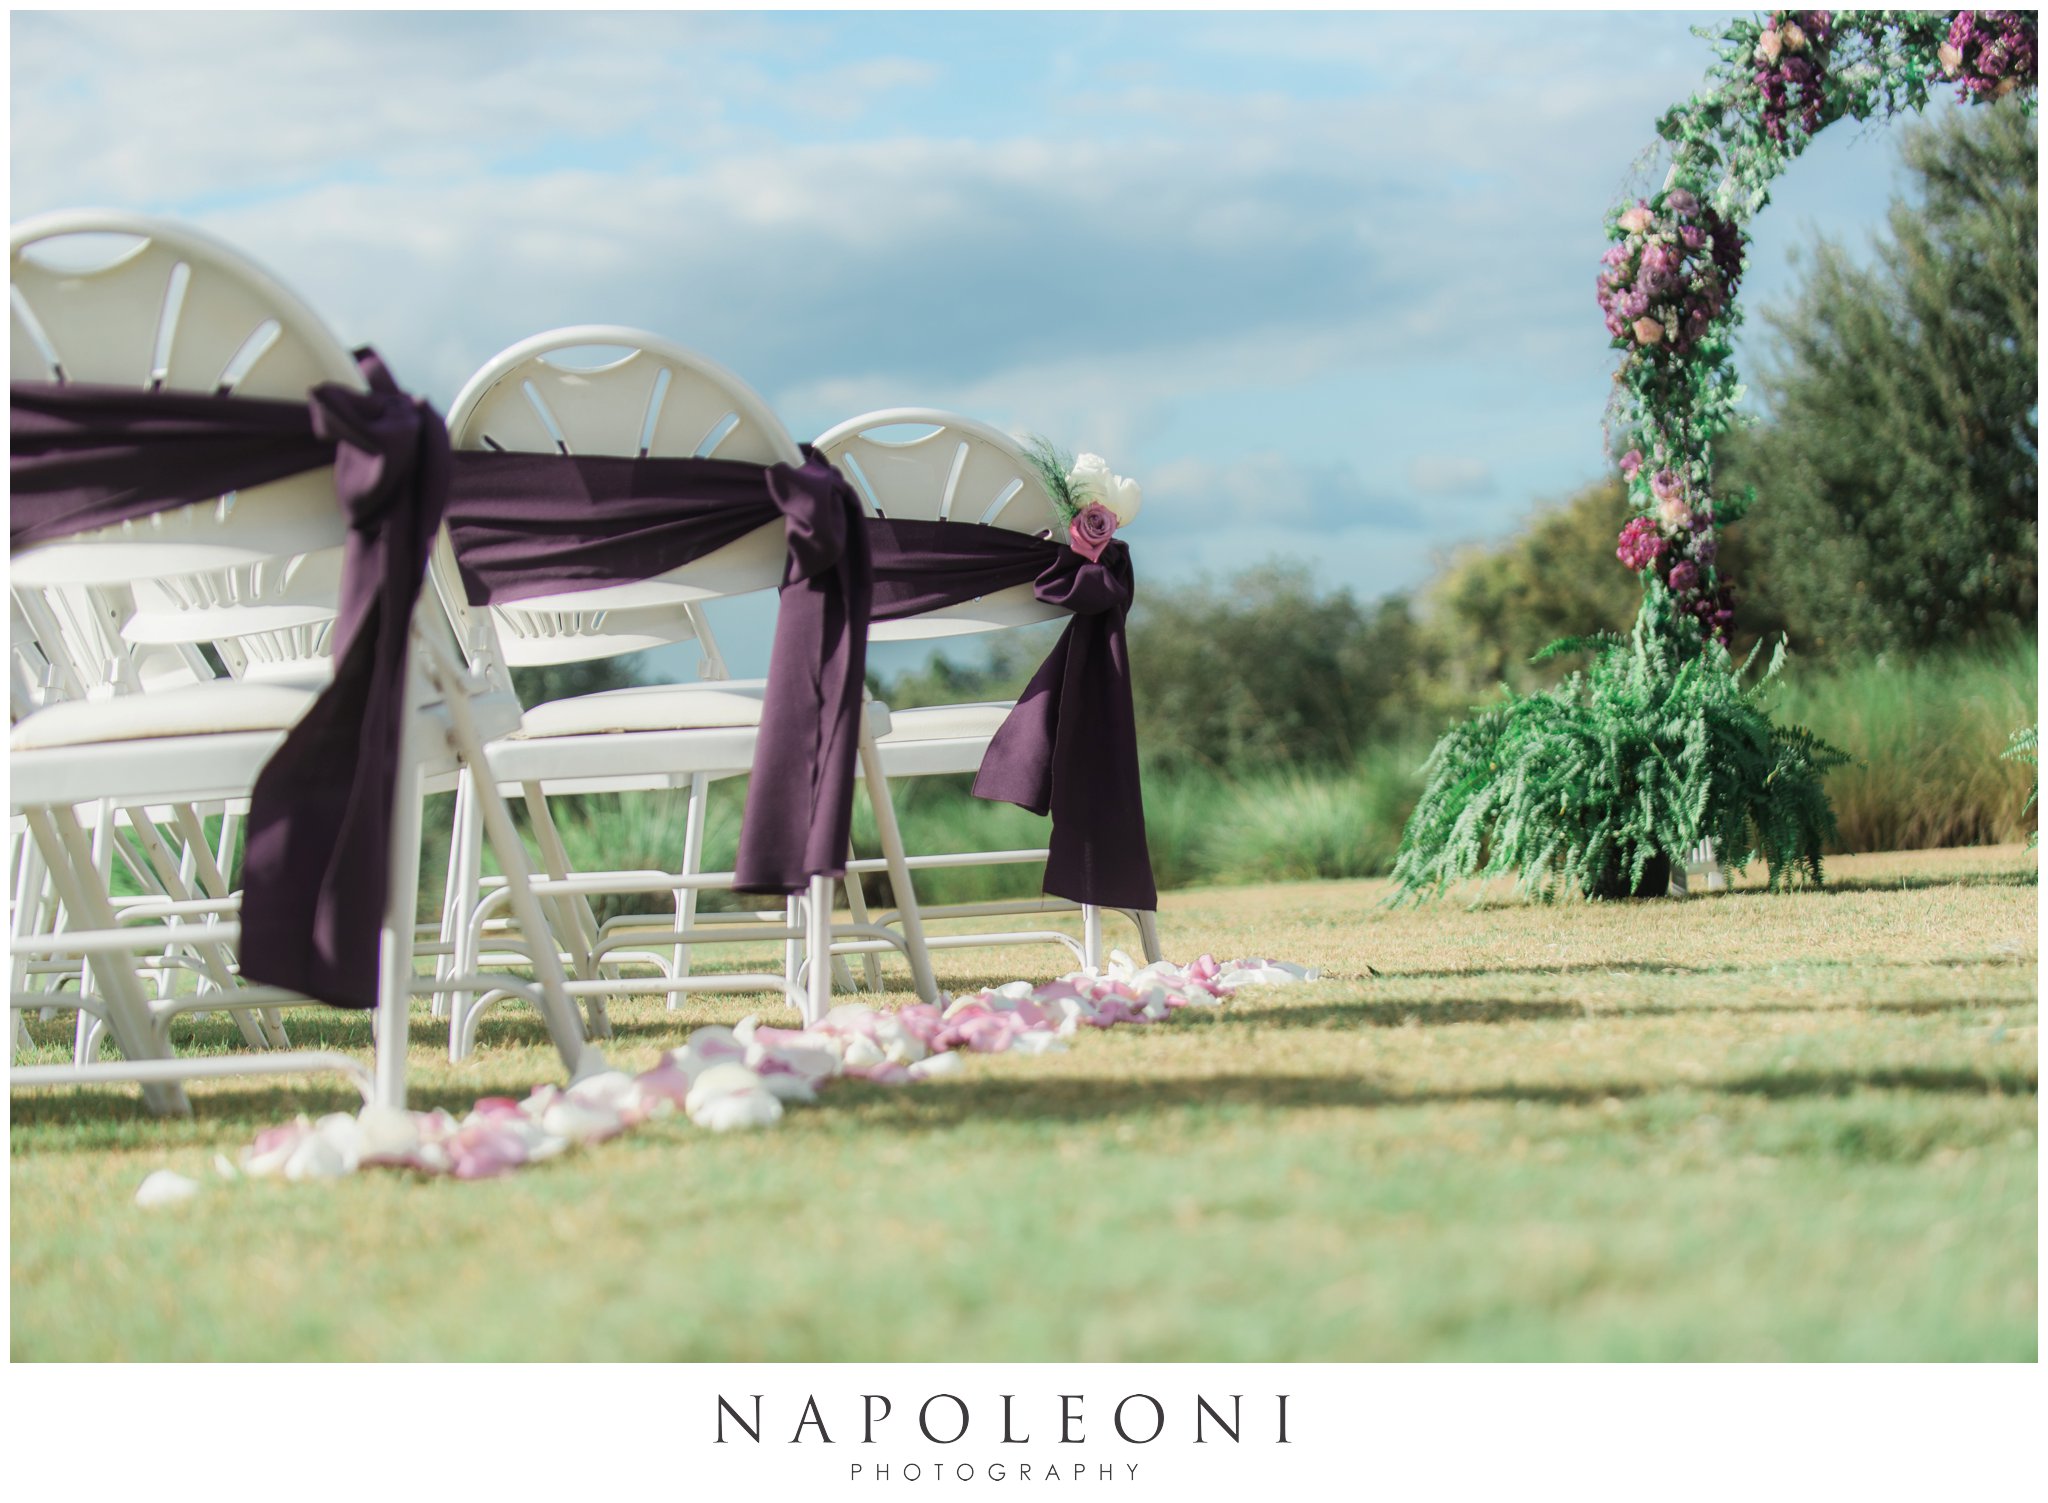 napoleoni-photography_0424a